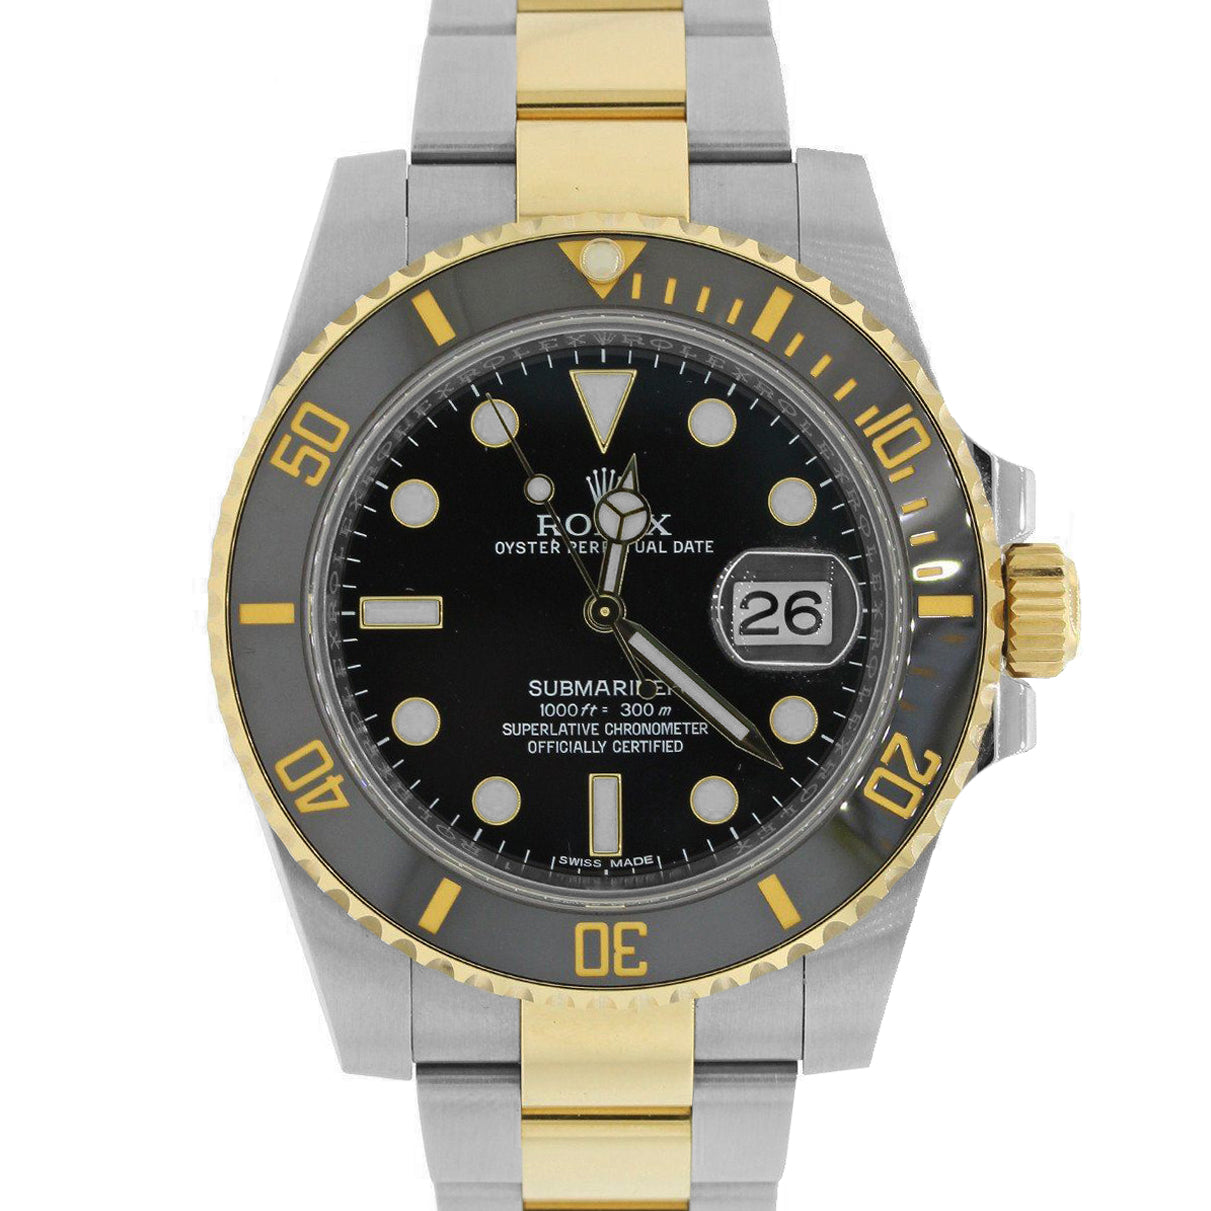 MINT Men's Rolex Submariner Ceramic 116613 N LN Two-Tone Gold Black Dive Watch